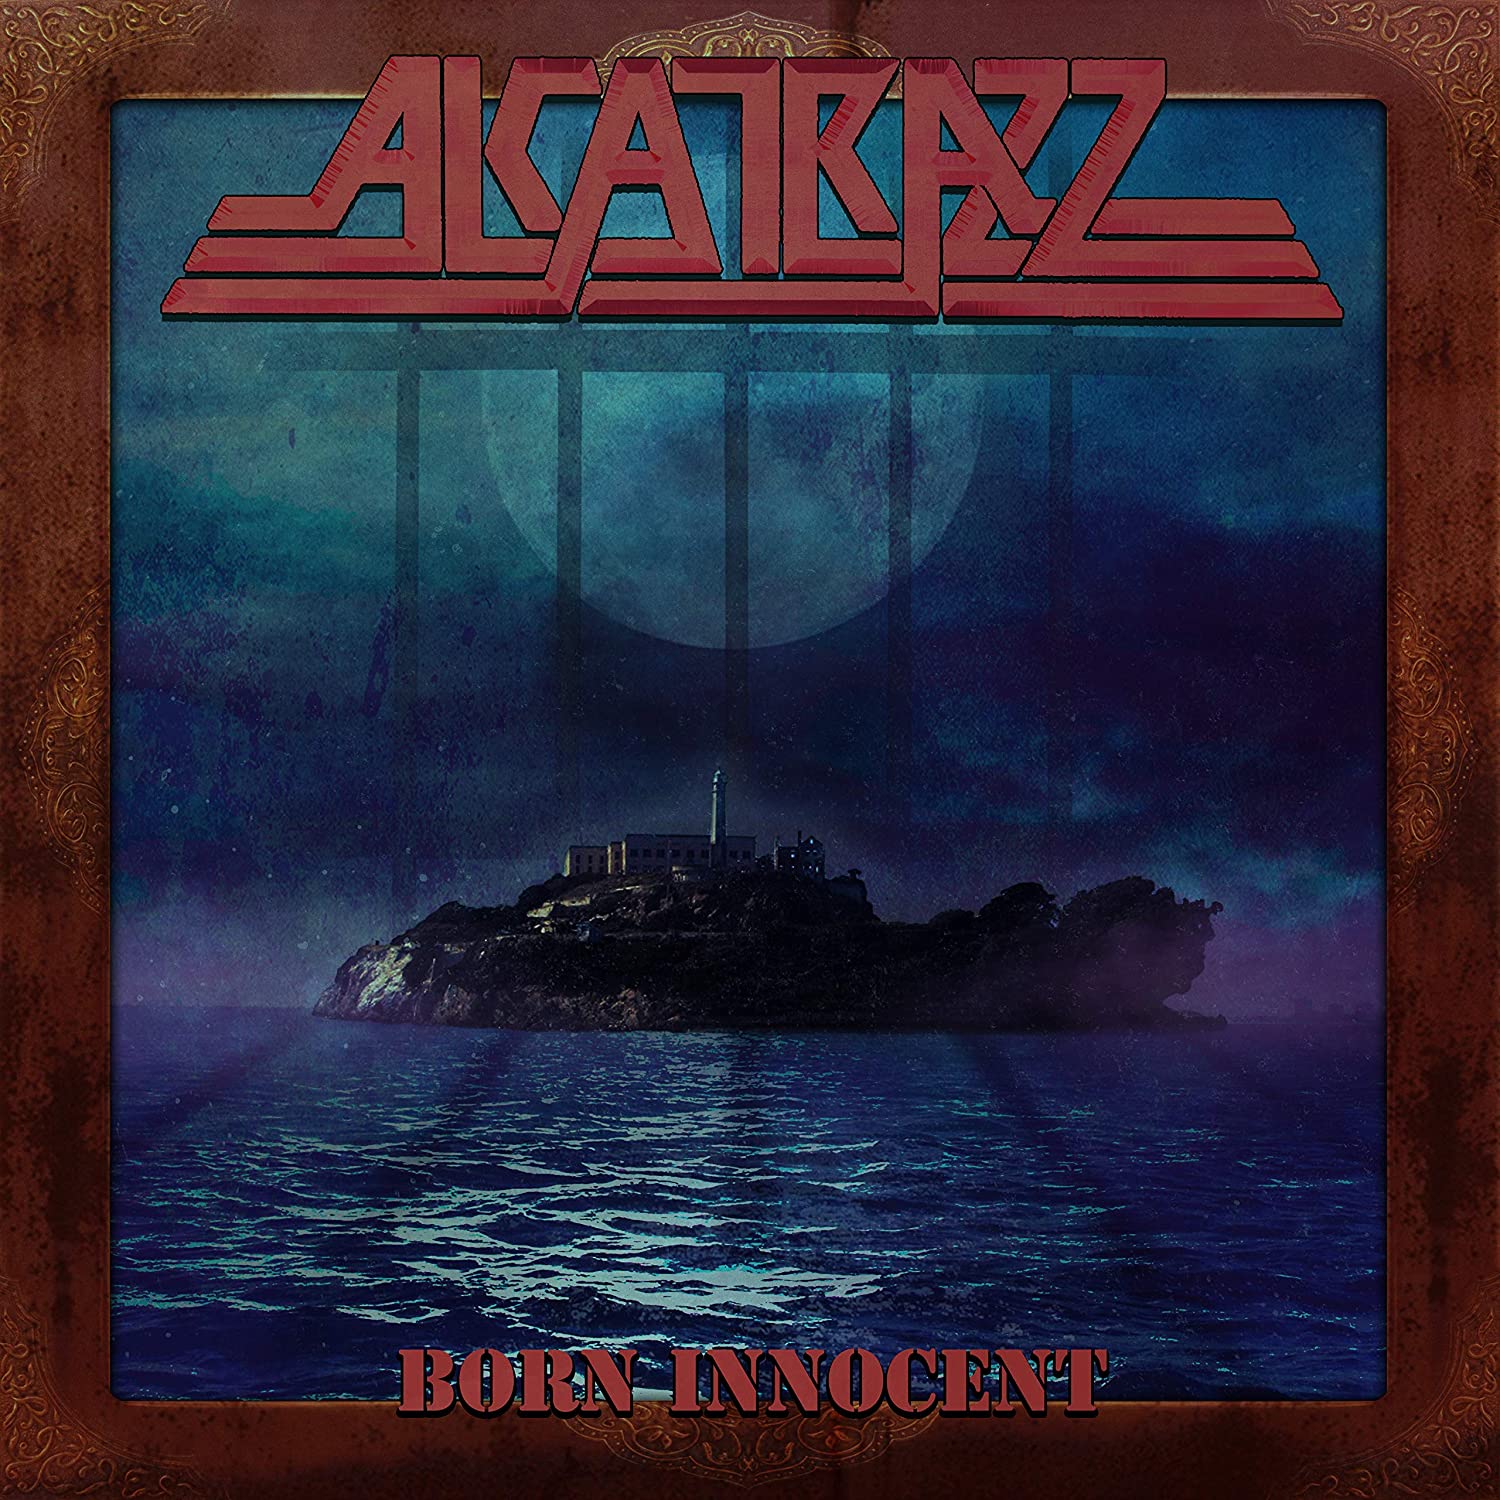 Born innocent | Alcatrazz | Steve Vai | stevevai.it